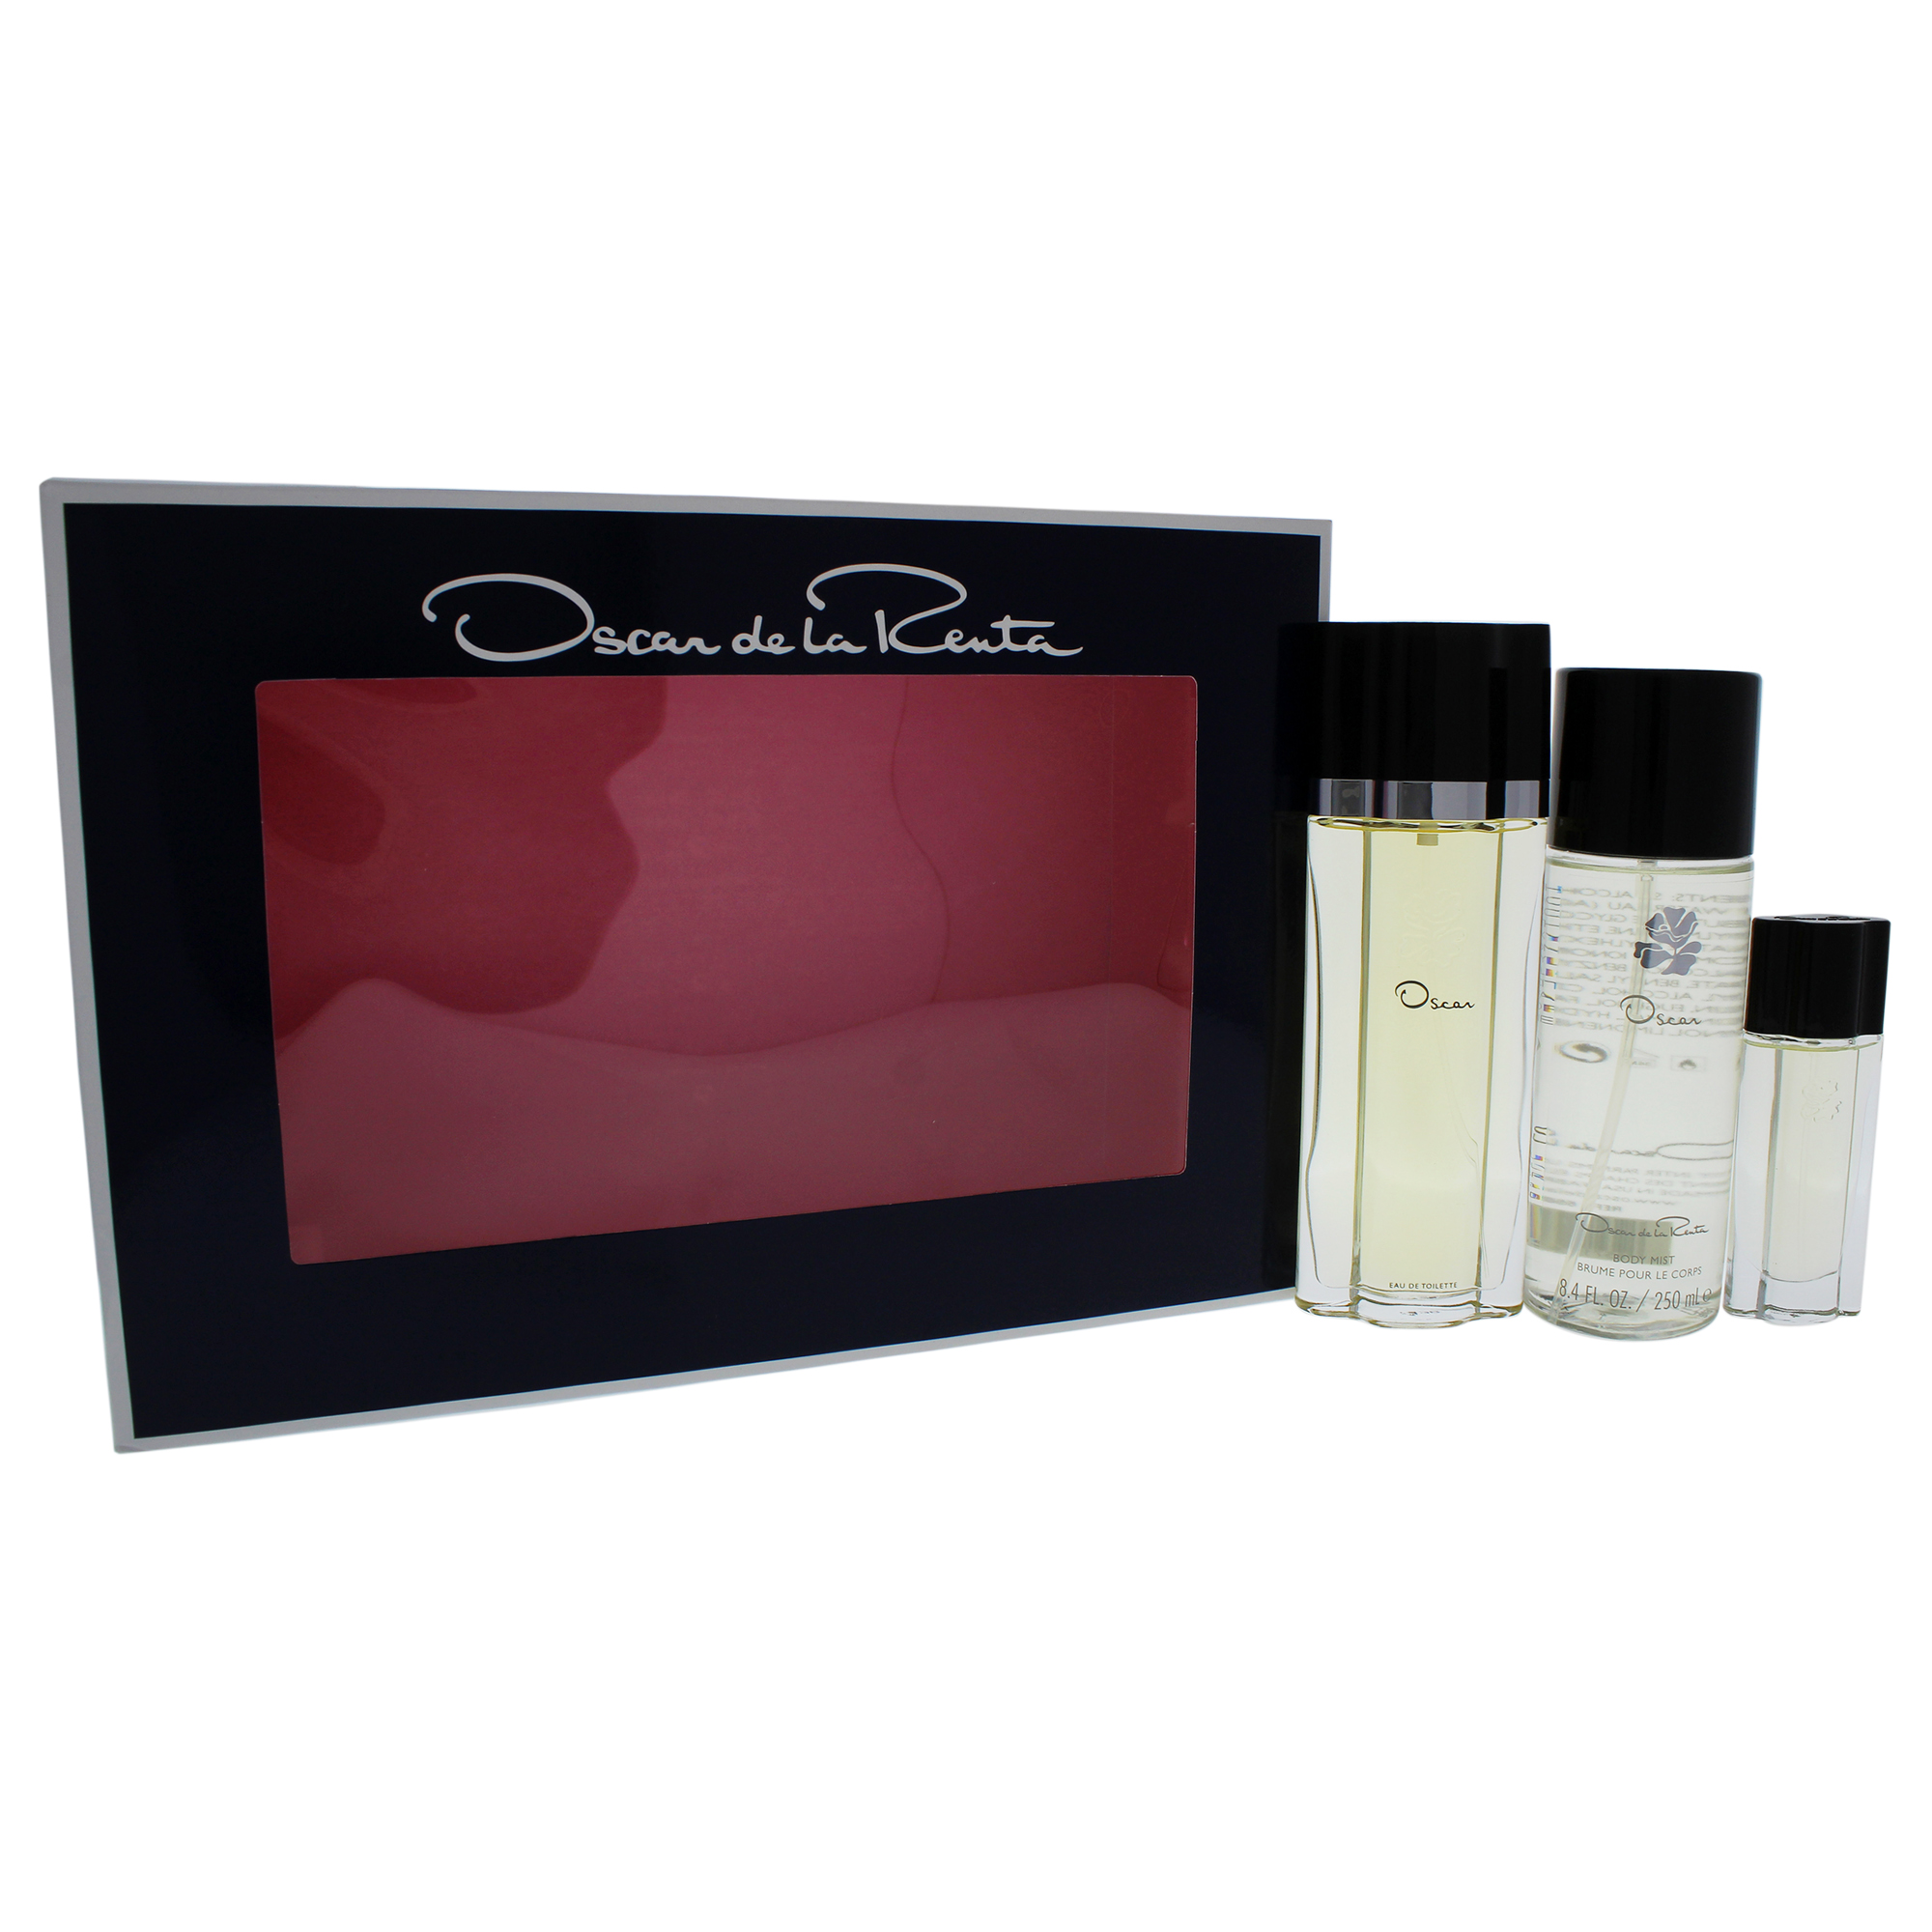 Oscar de la Renta Oscar Perfume Gift Set for Women, 3 Pieces - image 2 of 2